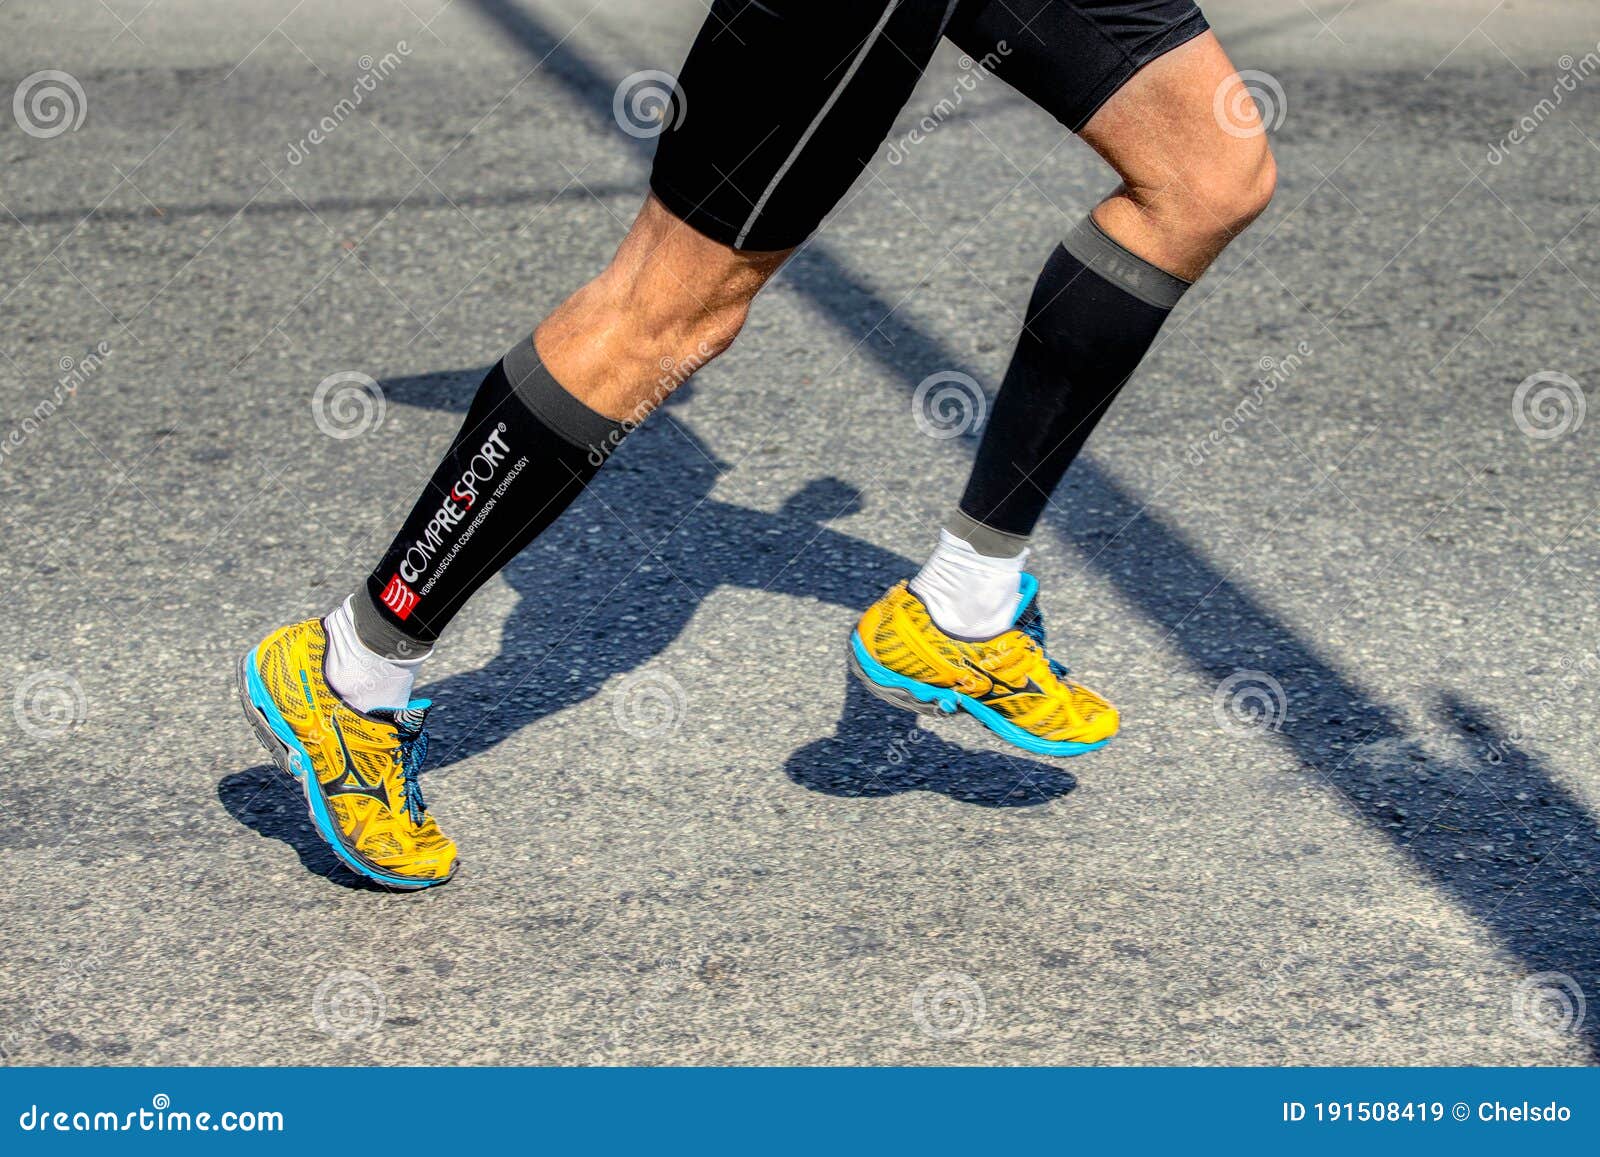 Legs Man Runner in Running Shoes Mizuno Editorial Stock Image - Image ...